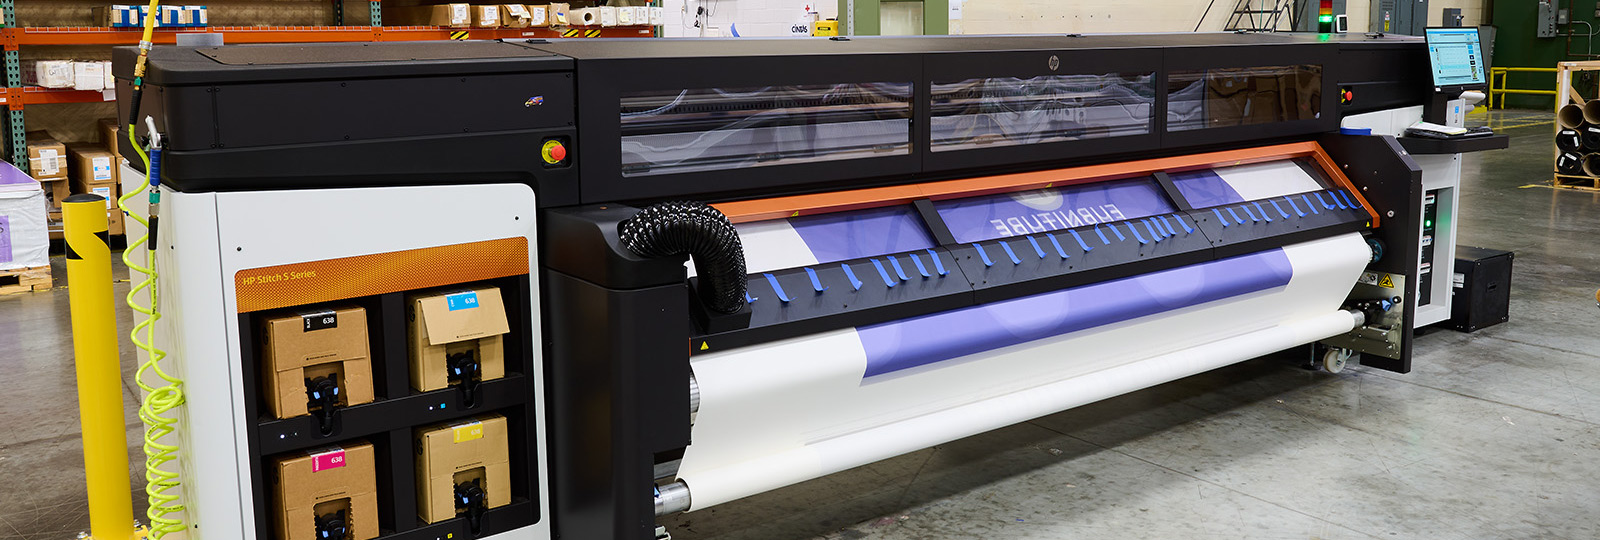 commercial dye sublimation printer